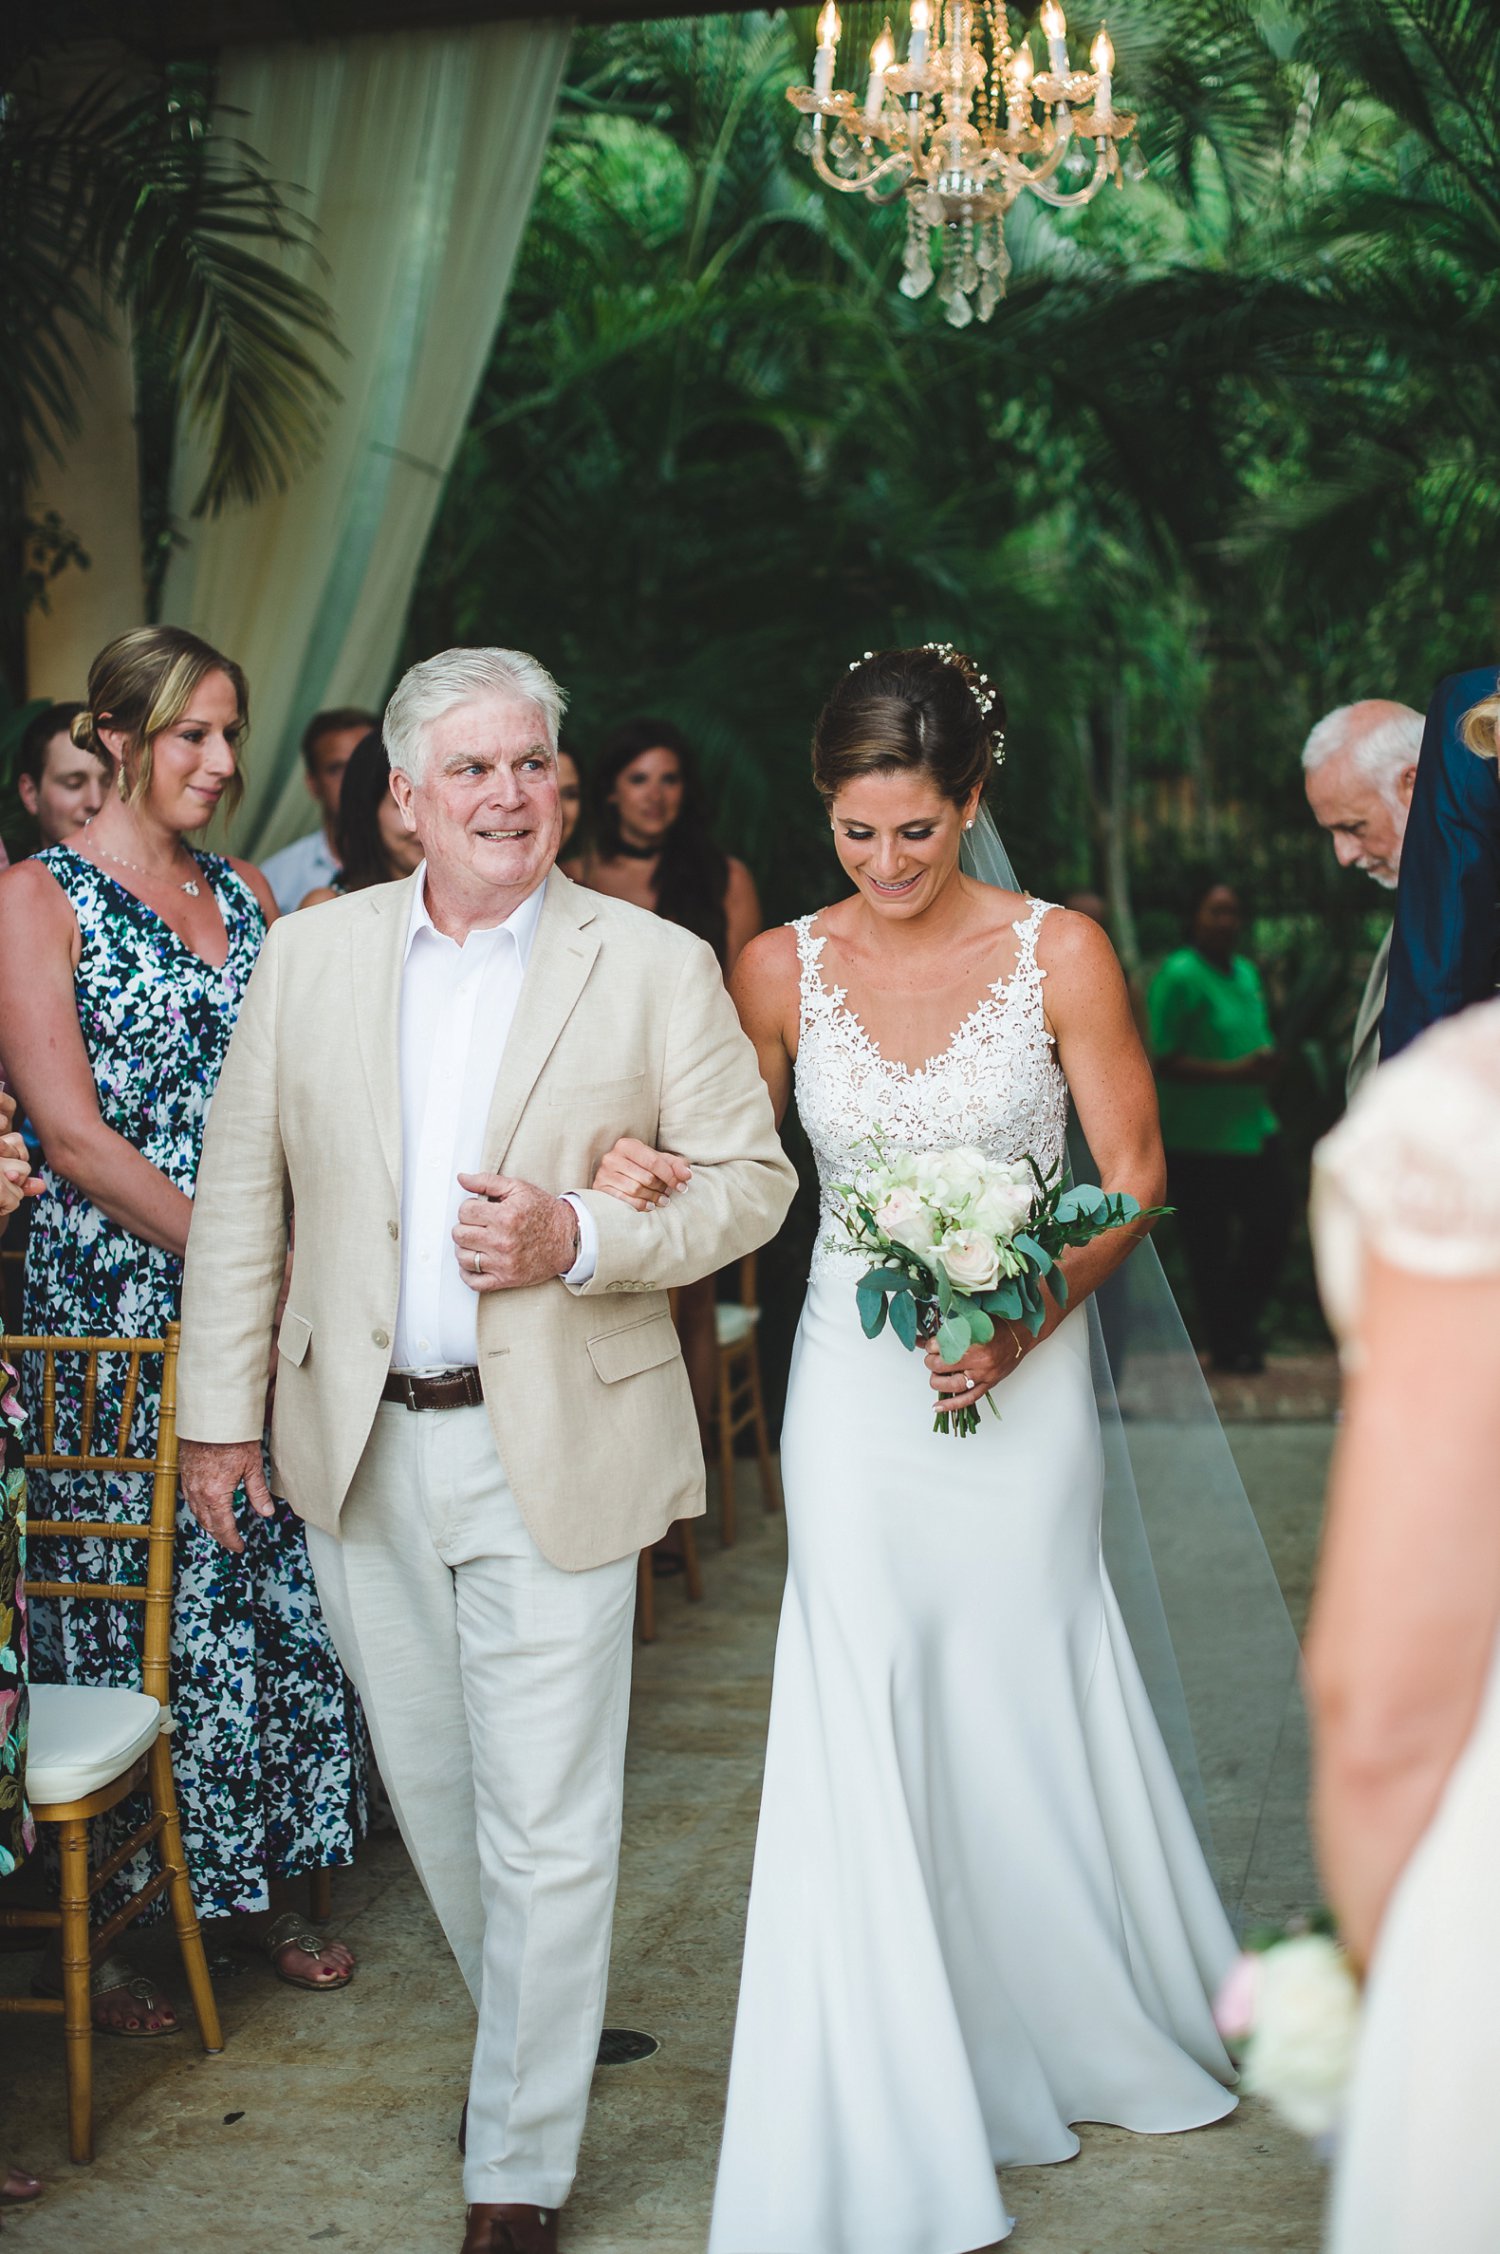 Bride and her father walk down the aisle at wedding ceremony at Villa Serenita.